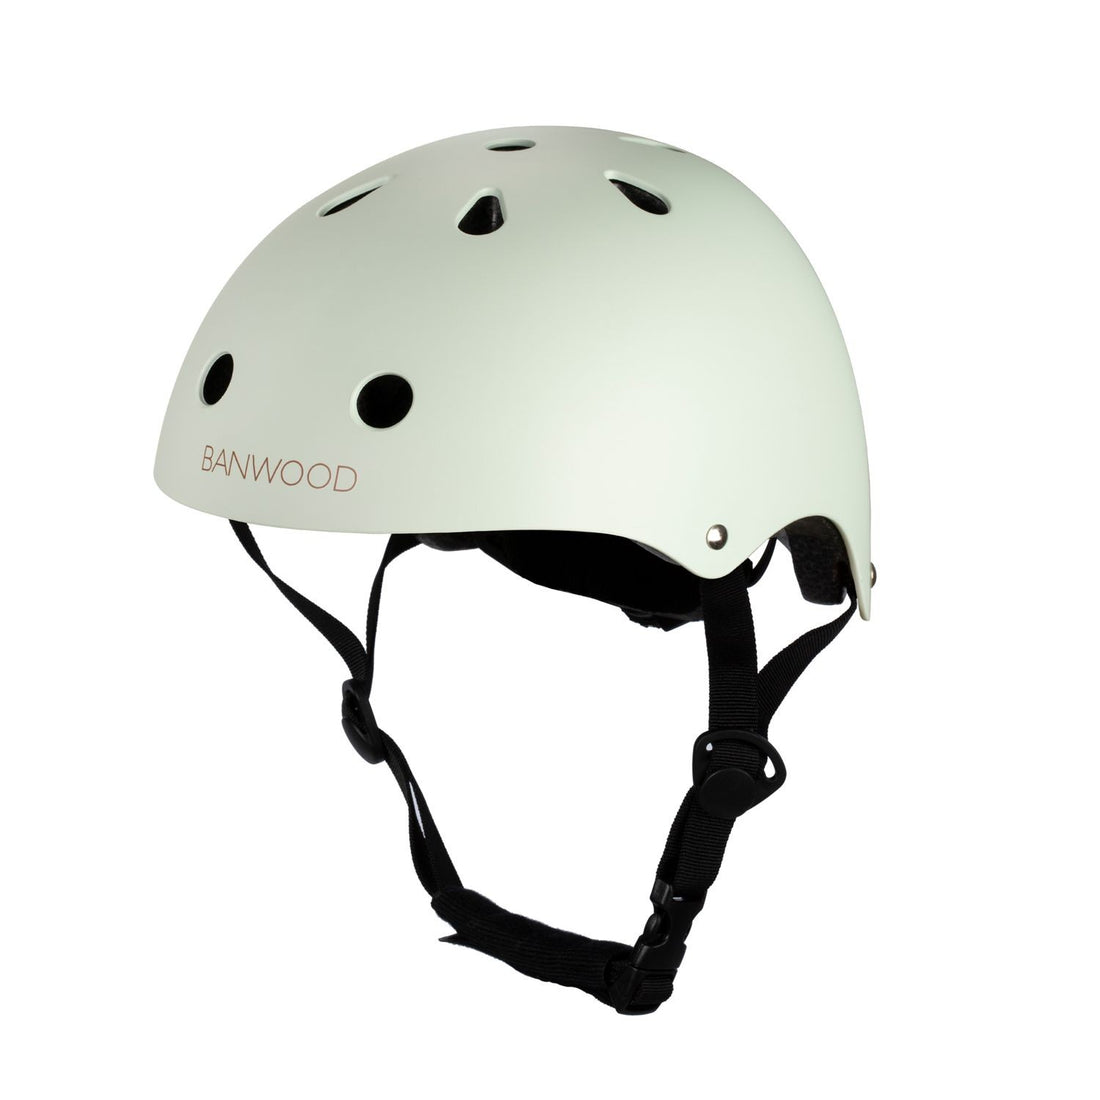 Banwood Classic Helmet (3-7 years) - Matte Mint (Pre-order)